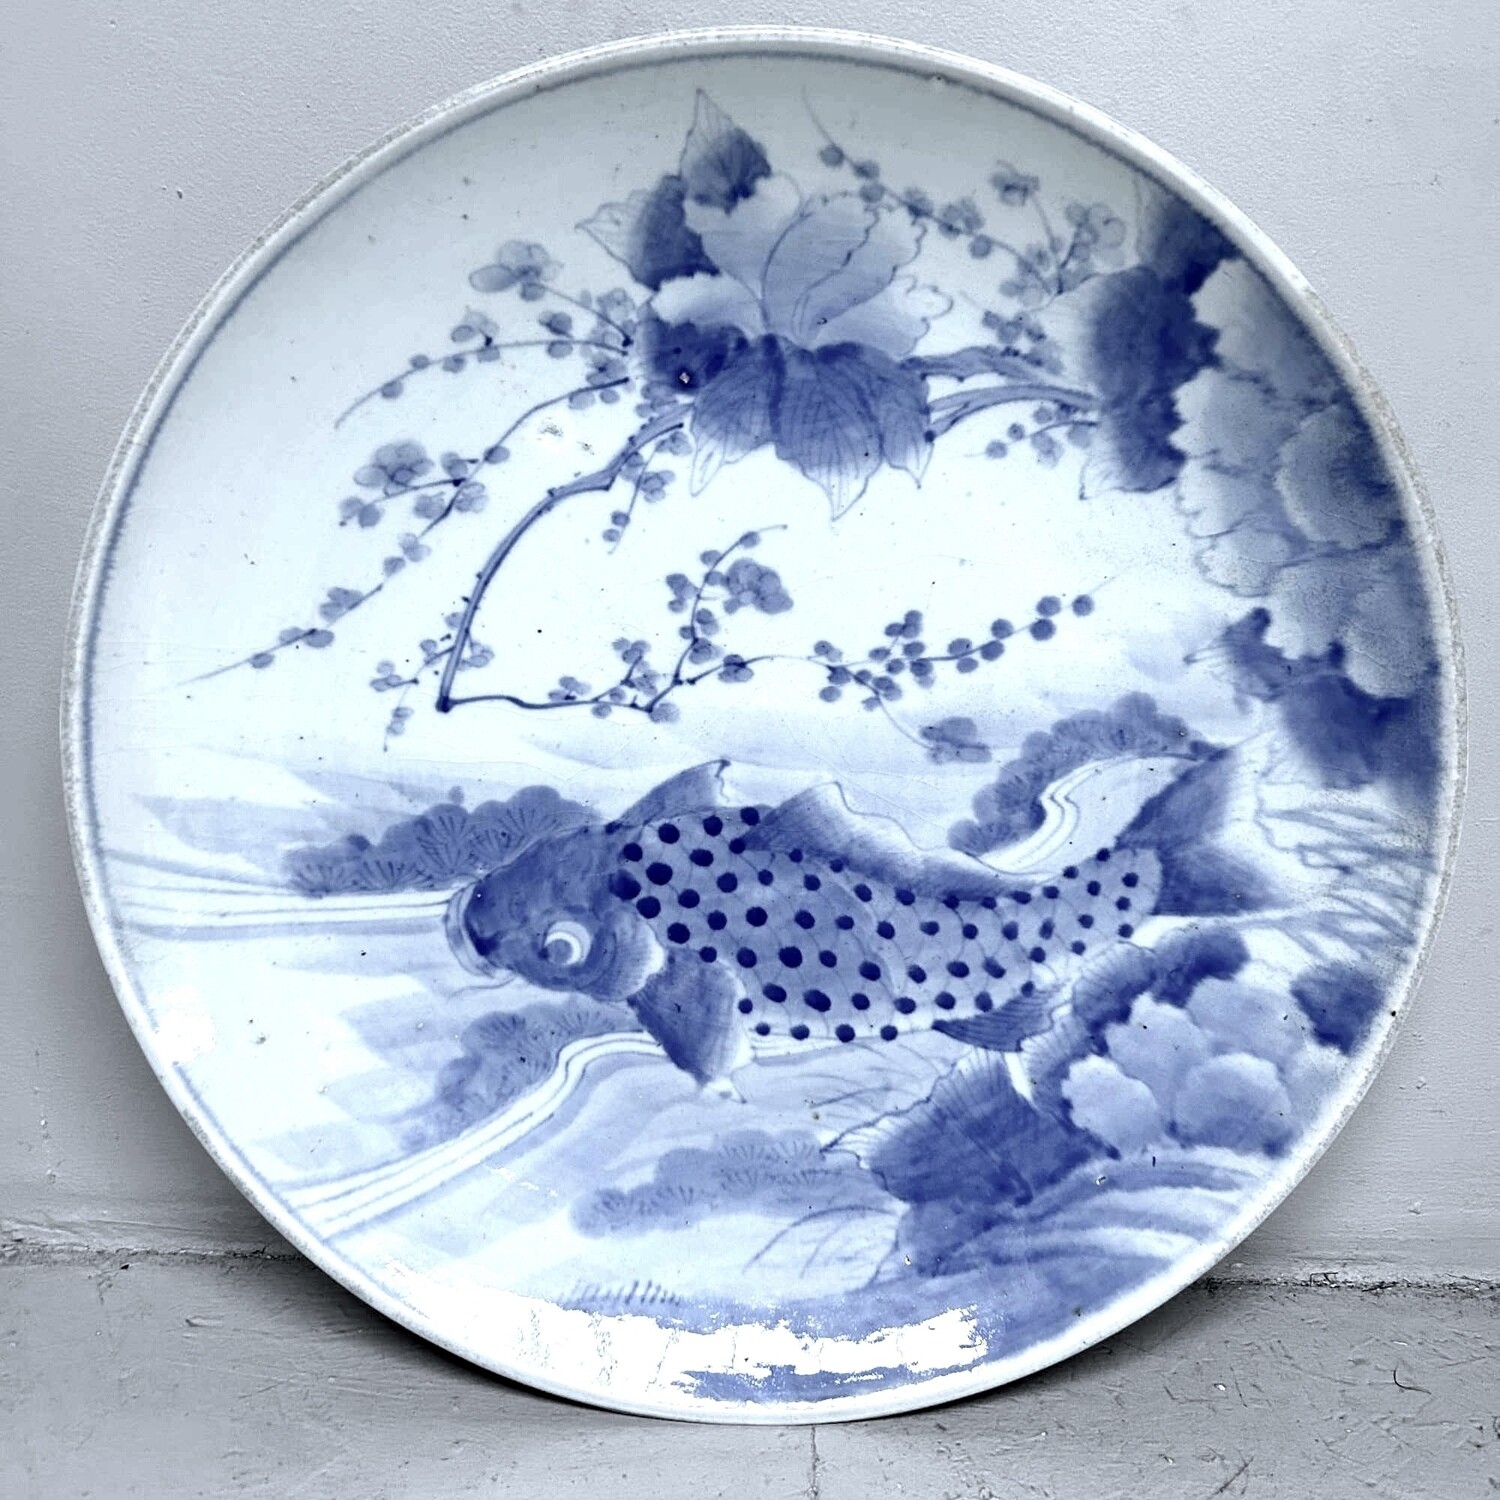 Japanese Decorative Plate 'Koi', Meiji era, circa 1900.